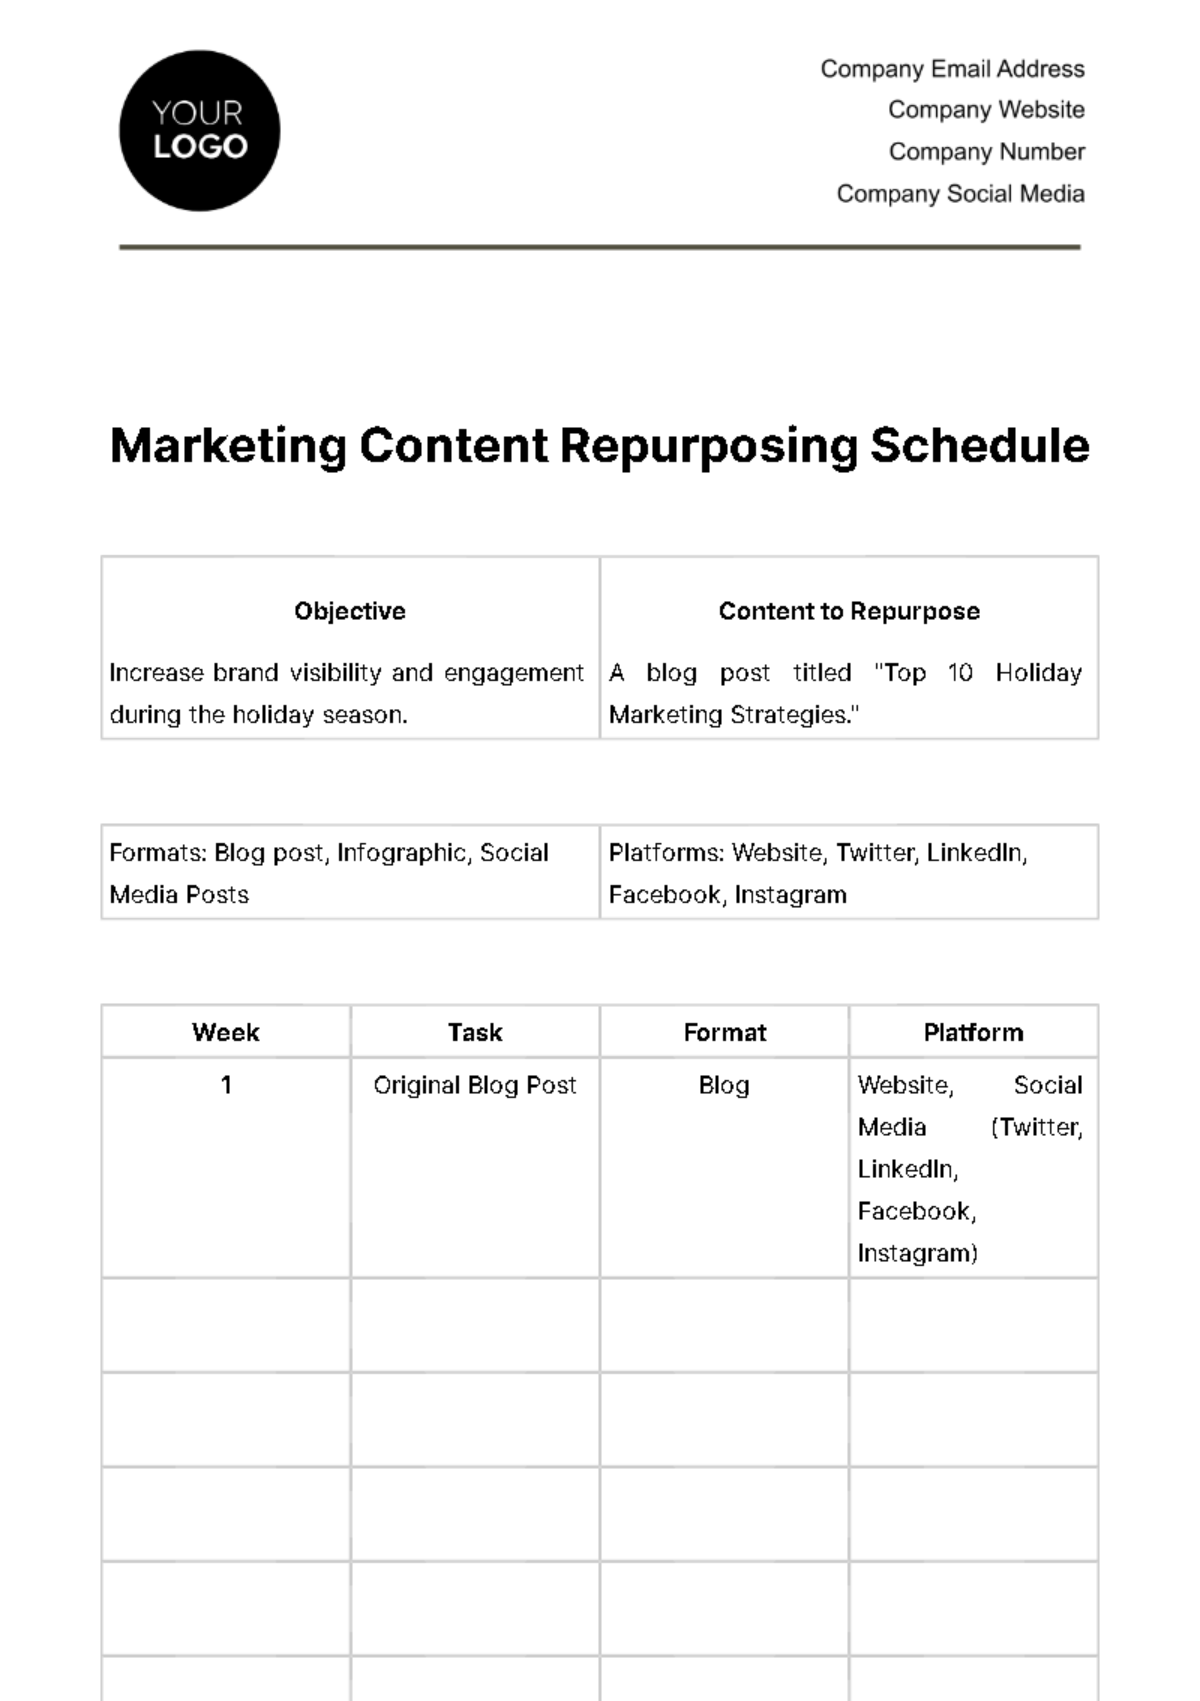 Free Marketing Content Repurposing Schedule Template